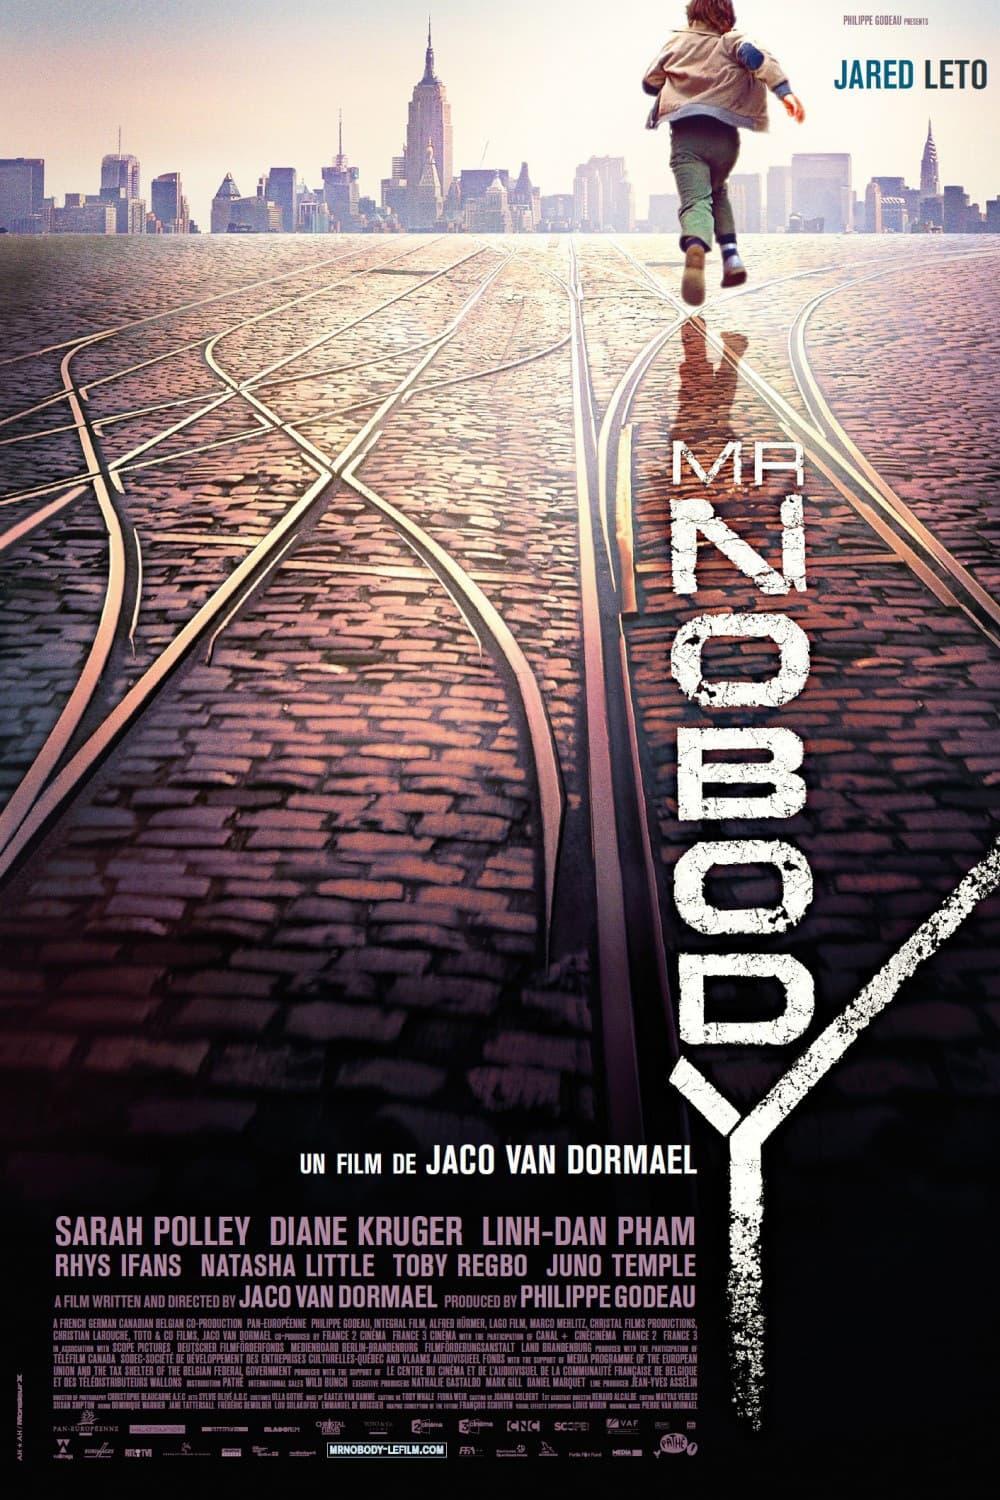 Mr. Nobody poster